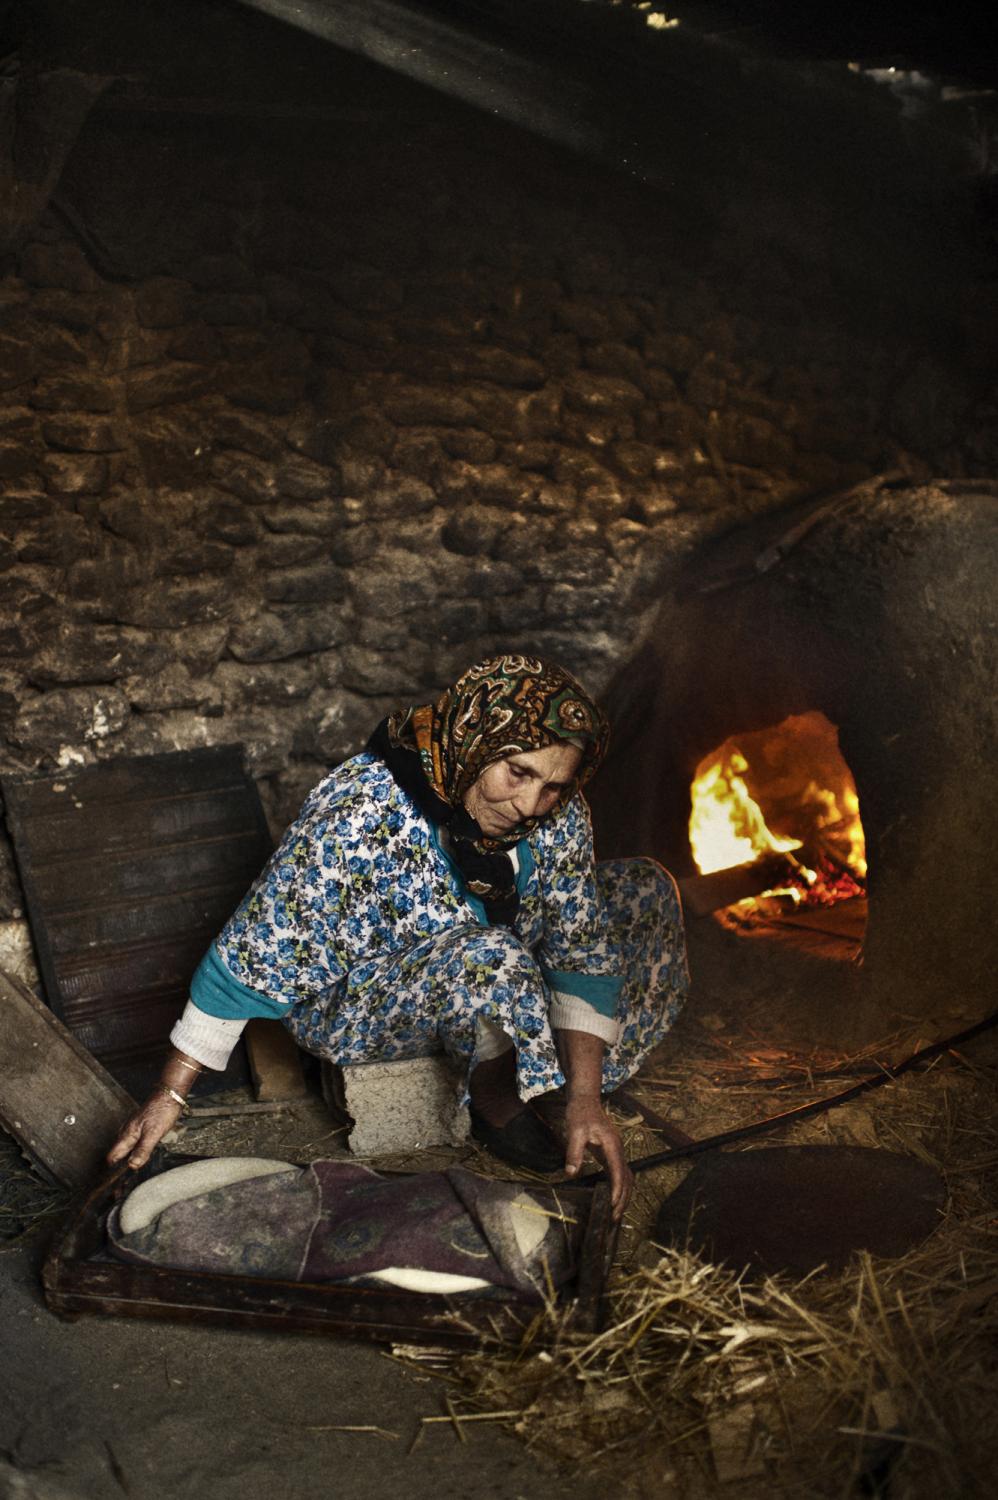 Microcredit / Morocco - Morocco, Oulad Taib. November 2011.
Fatima Bouktib...